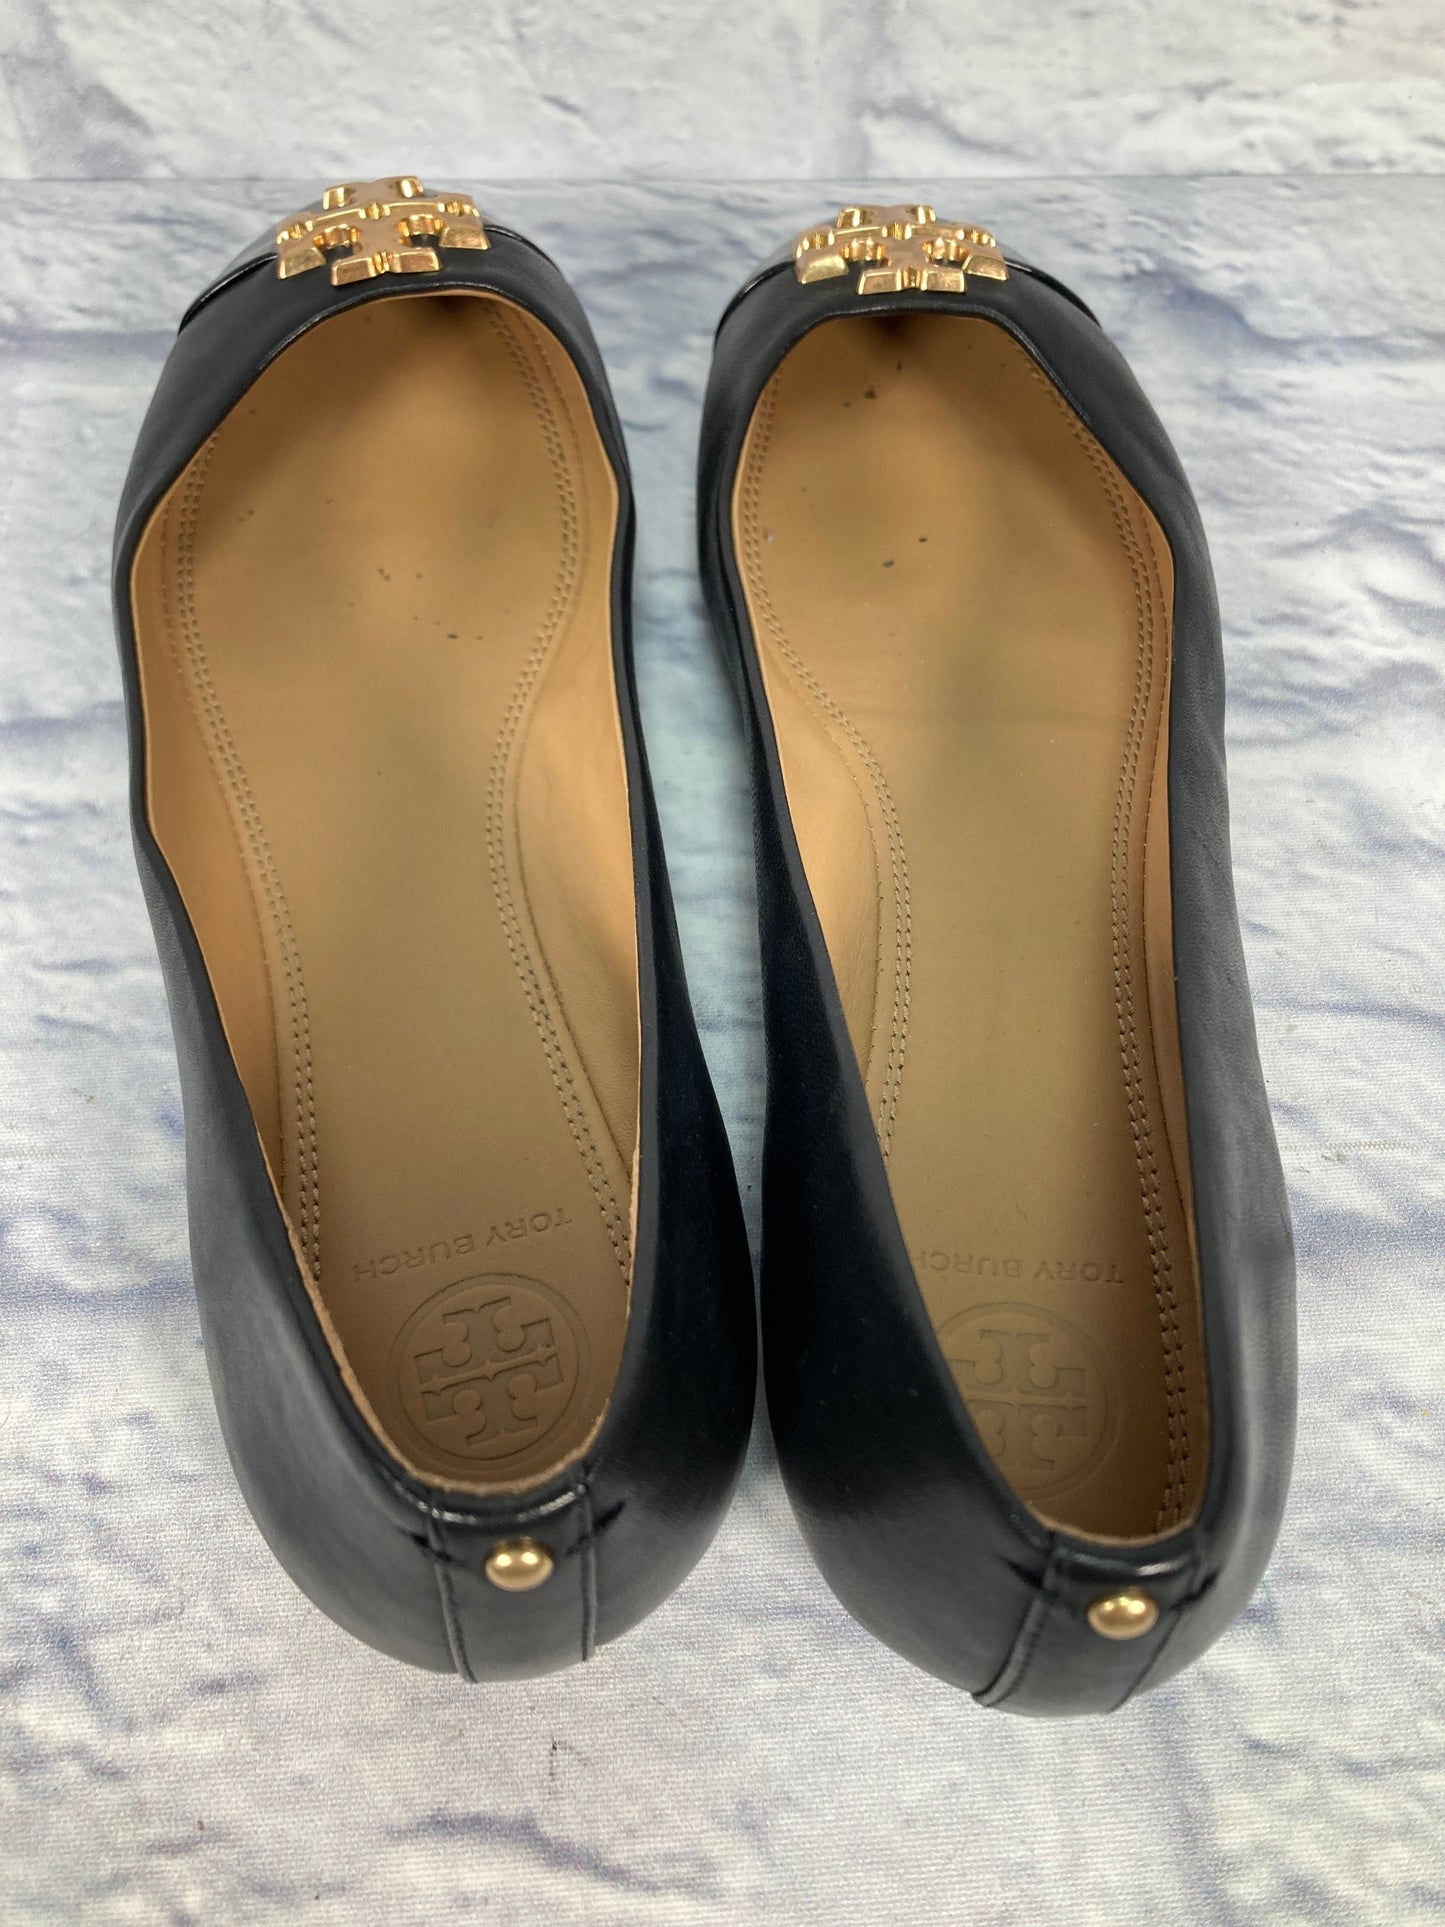 Black & Gold Shoes Flats Tory Burch, Size 7.5